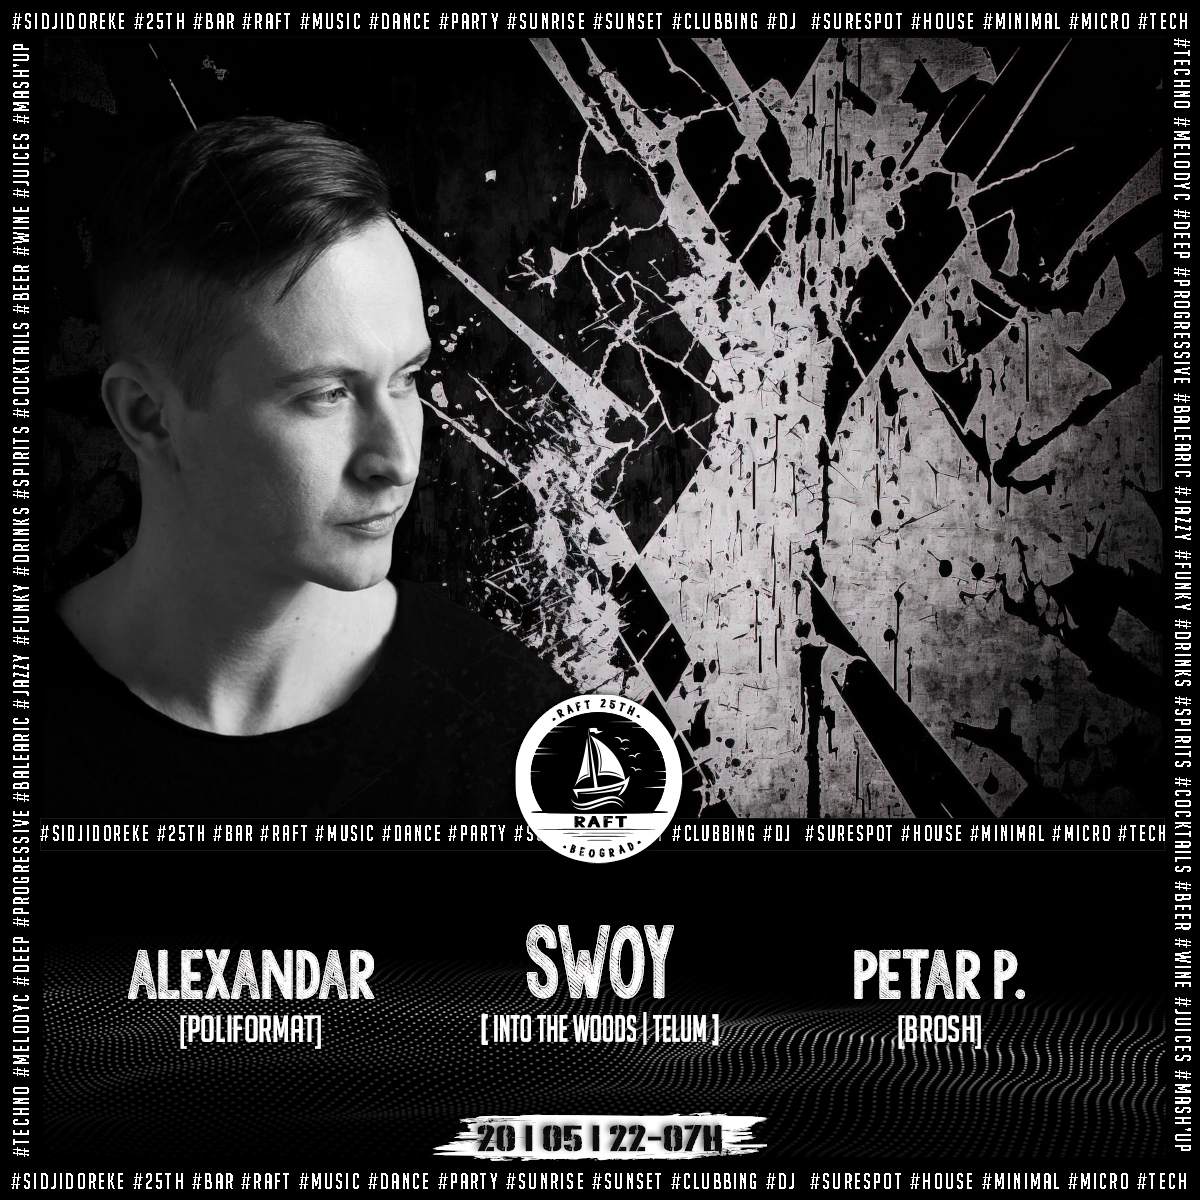 Swoy [Into the woods - Telum] - Aleksandar [Poliformat] - Petar P. [Brosh] - フライヤー裏